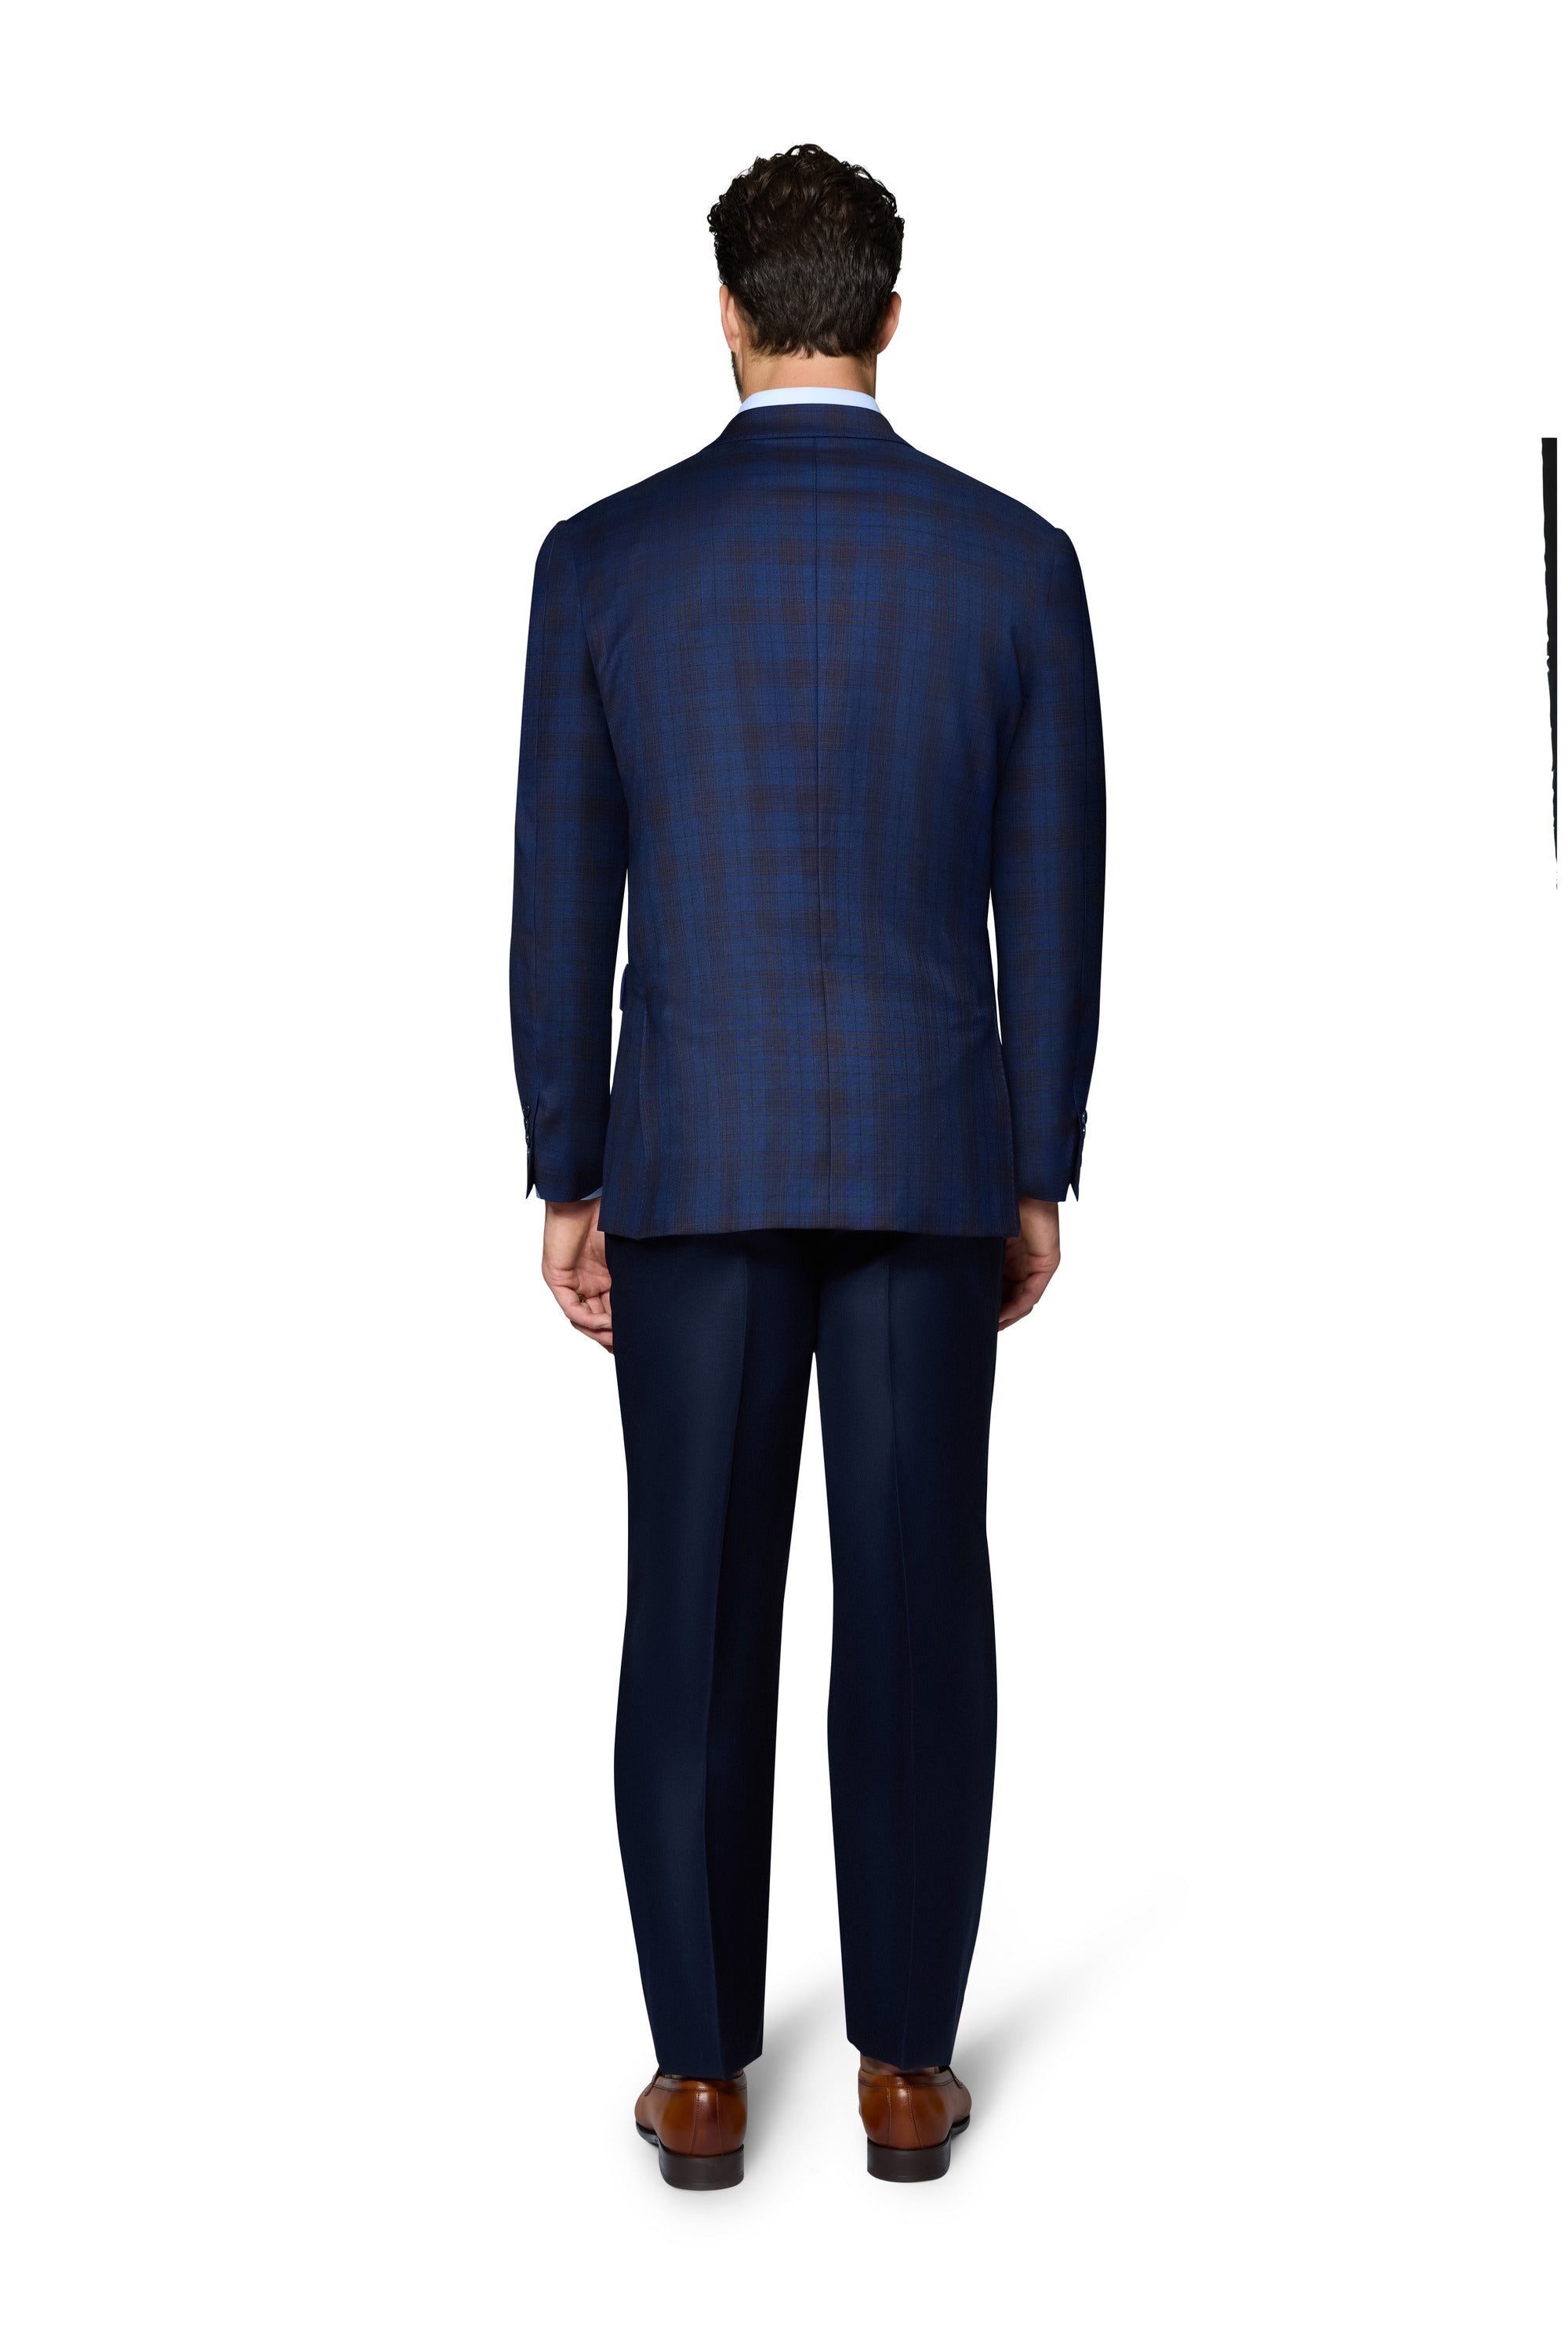 Berragamo Wool Sport Coat Modern Fit - Blue Plaid